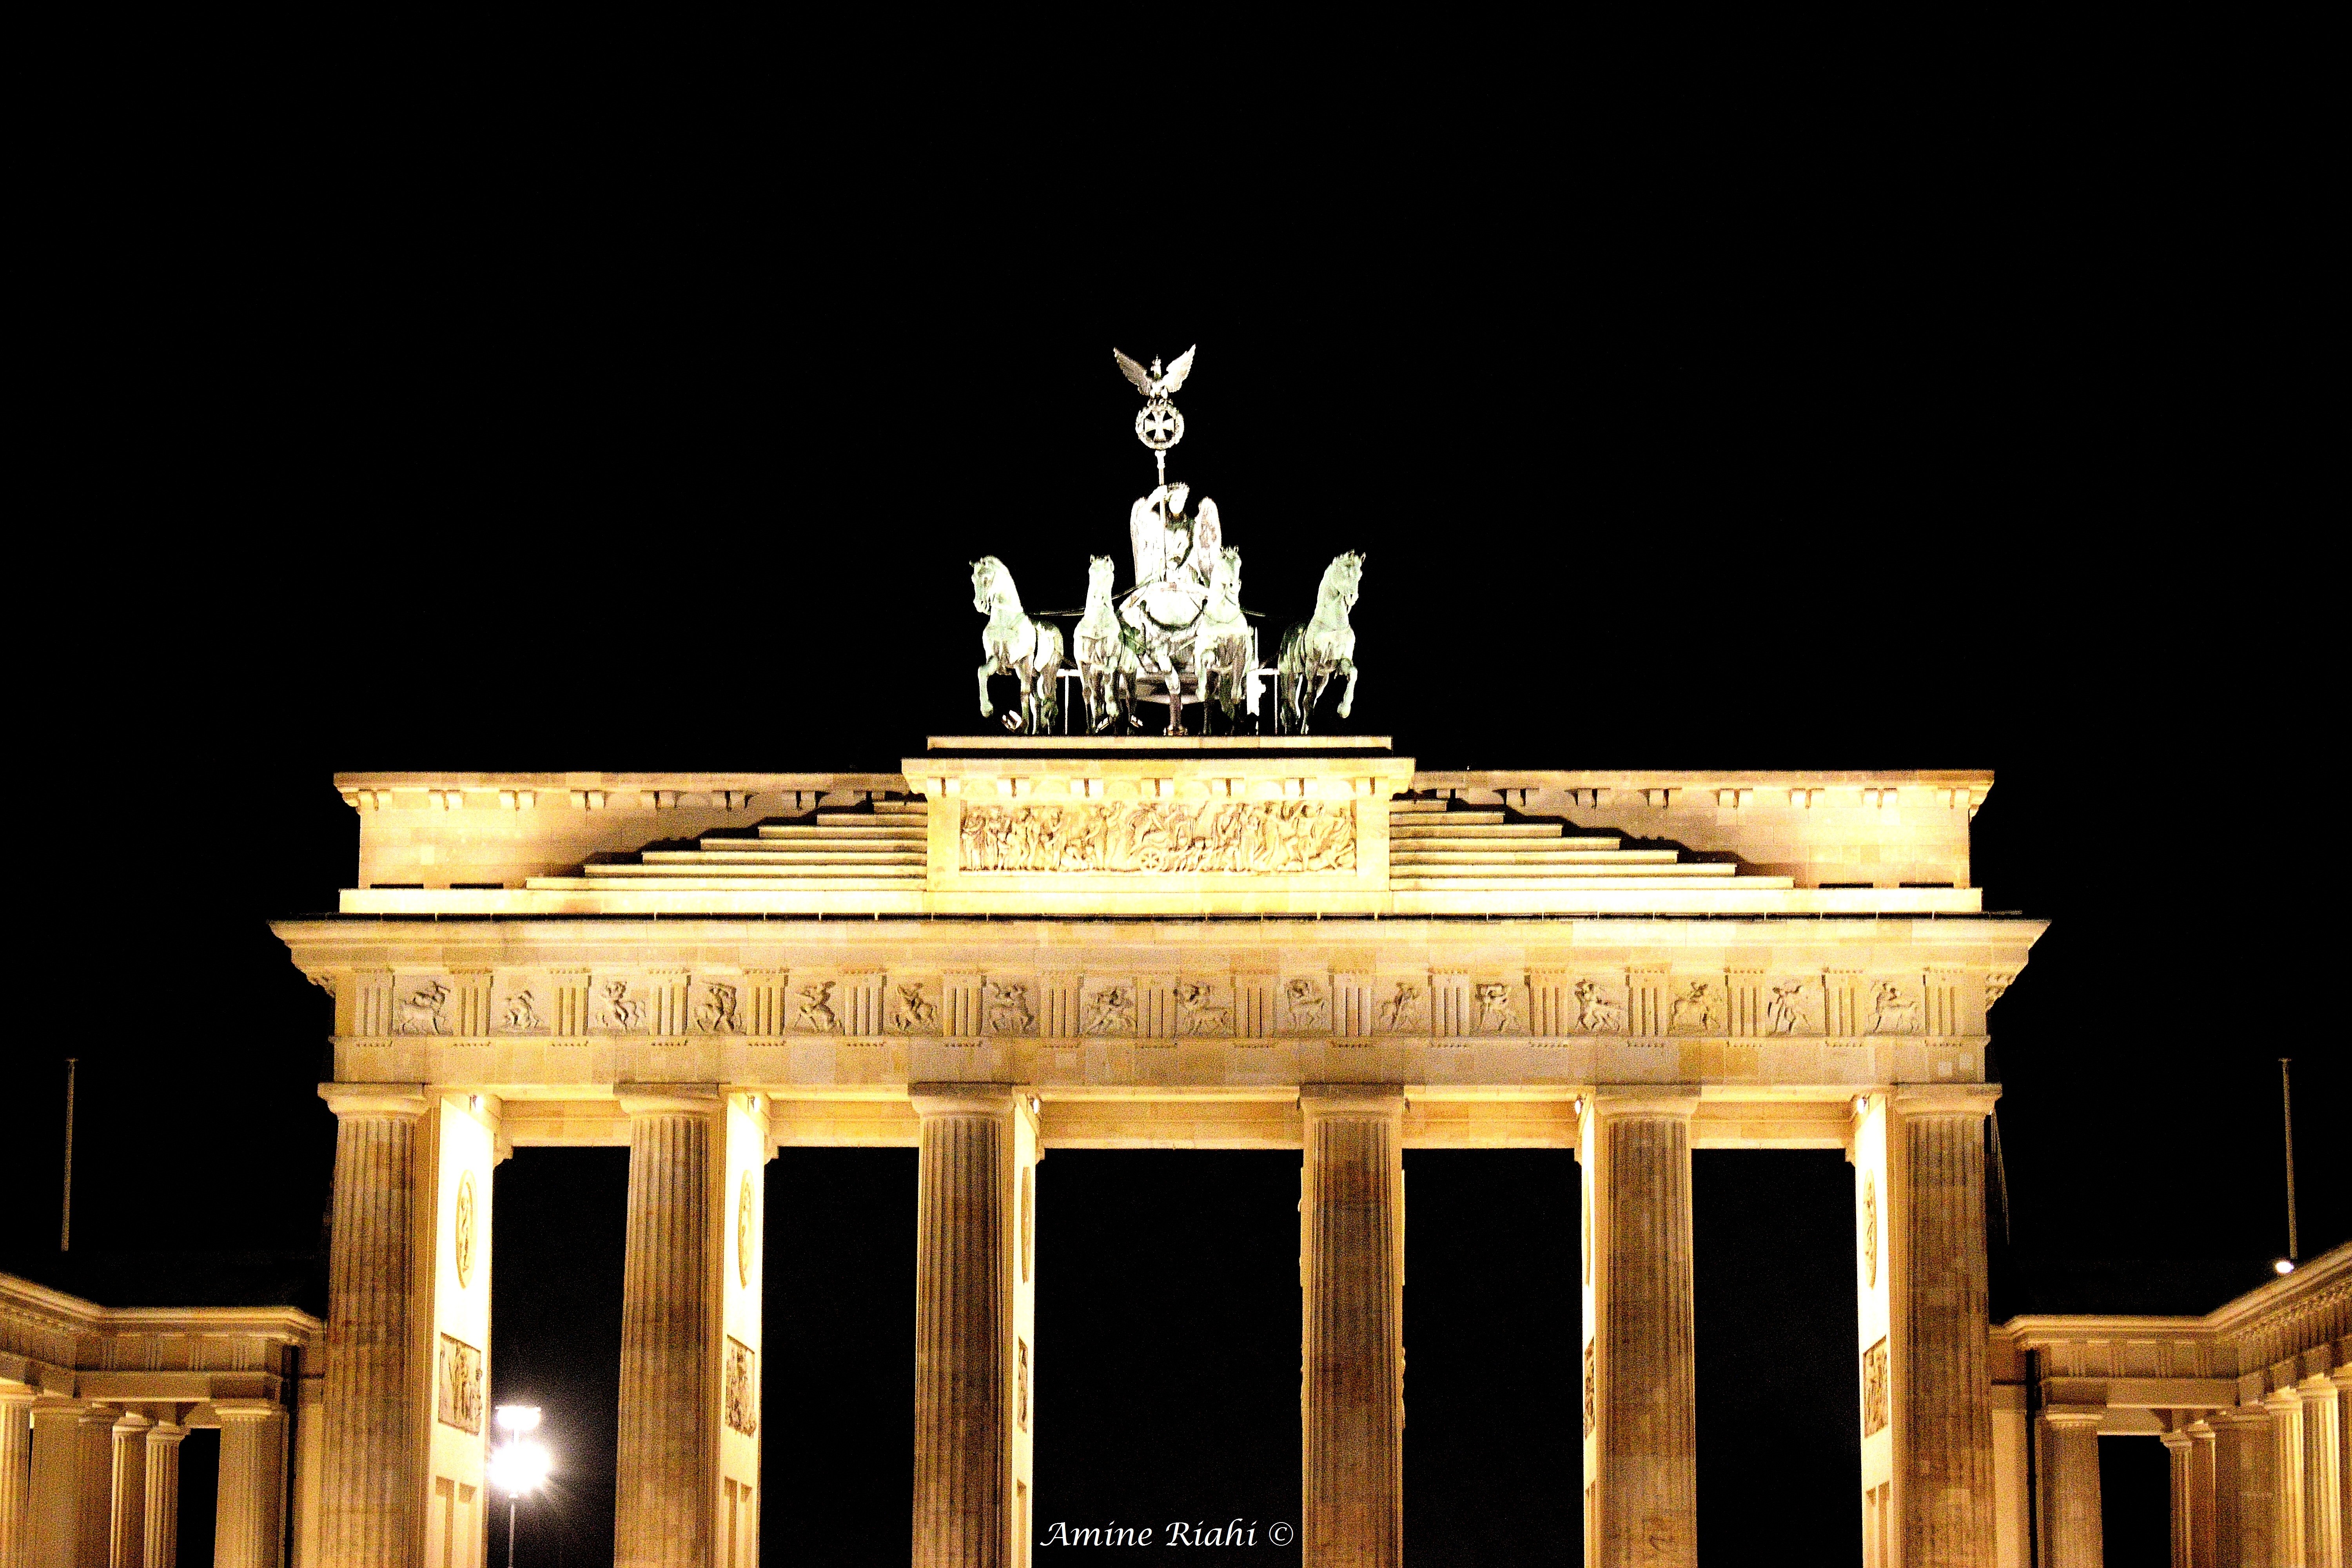 General 6000x4000 Berlin Brandenburg Gate Germany night city landmark Europe low light watermarked